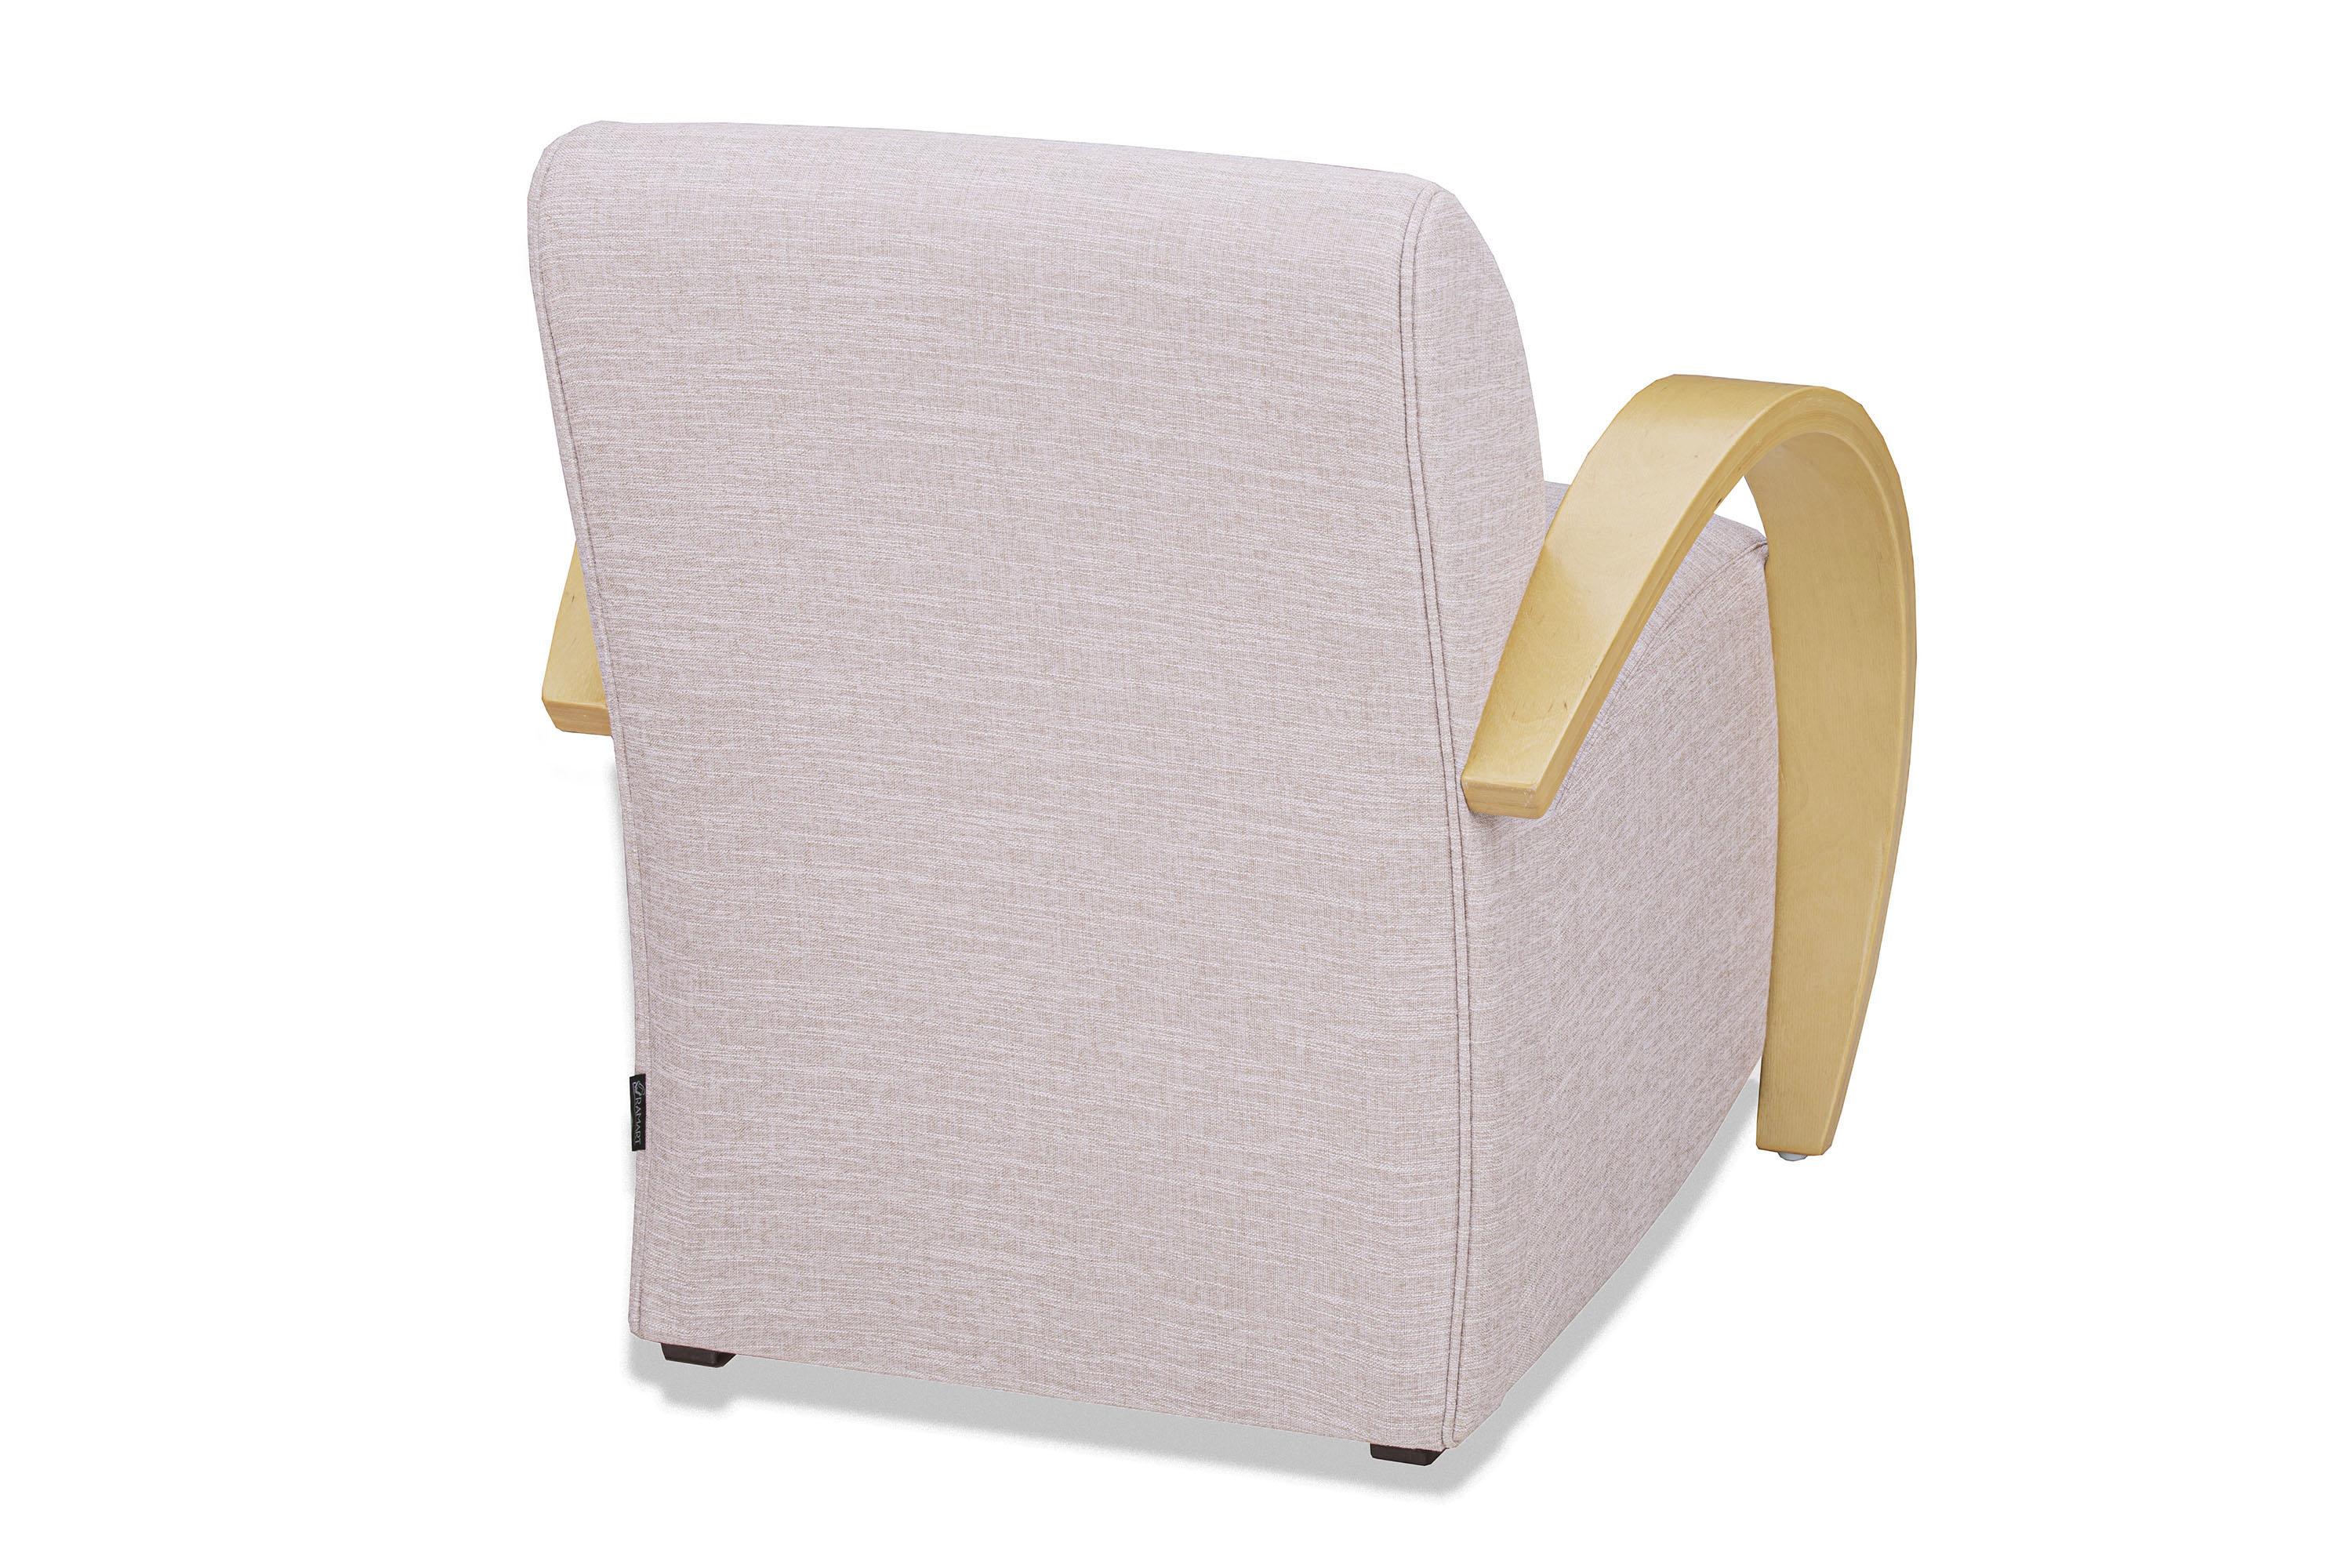 Фото №3 Паладин стандарт кресло рогожка Орион Роз